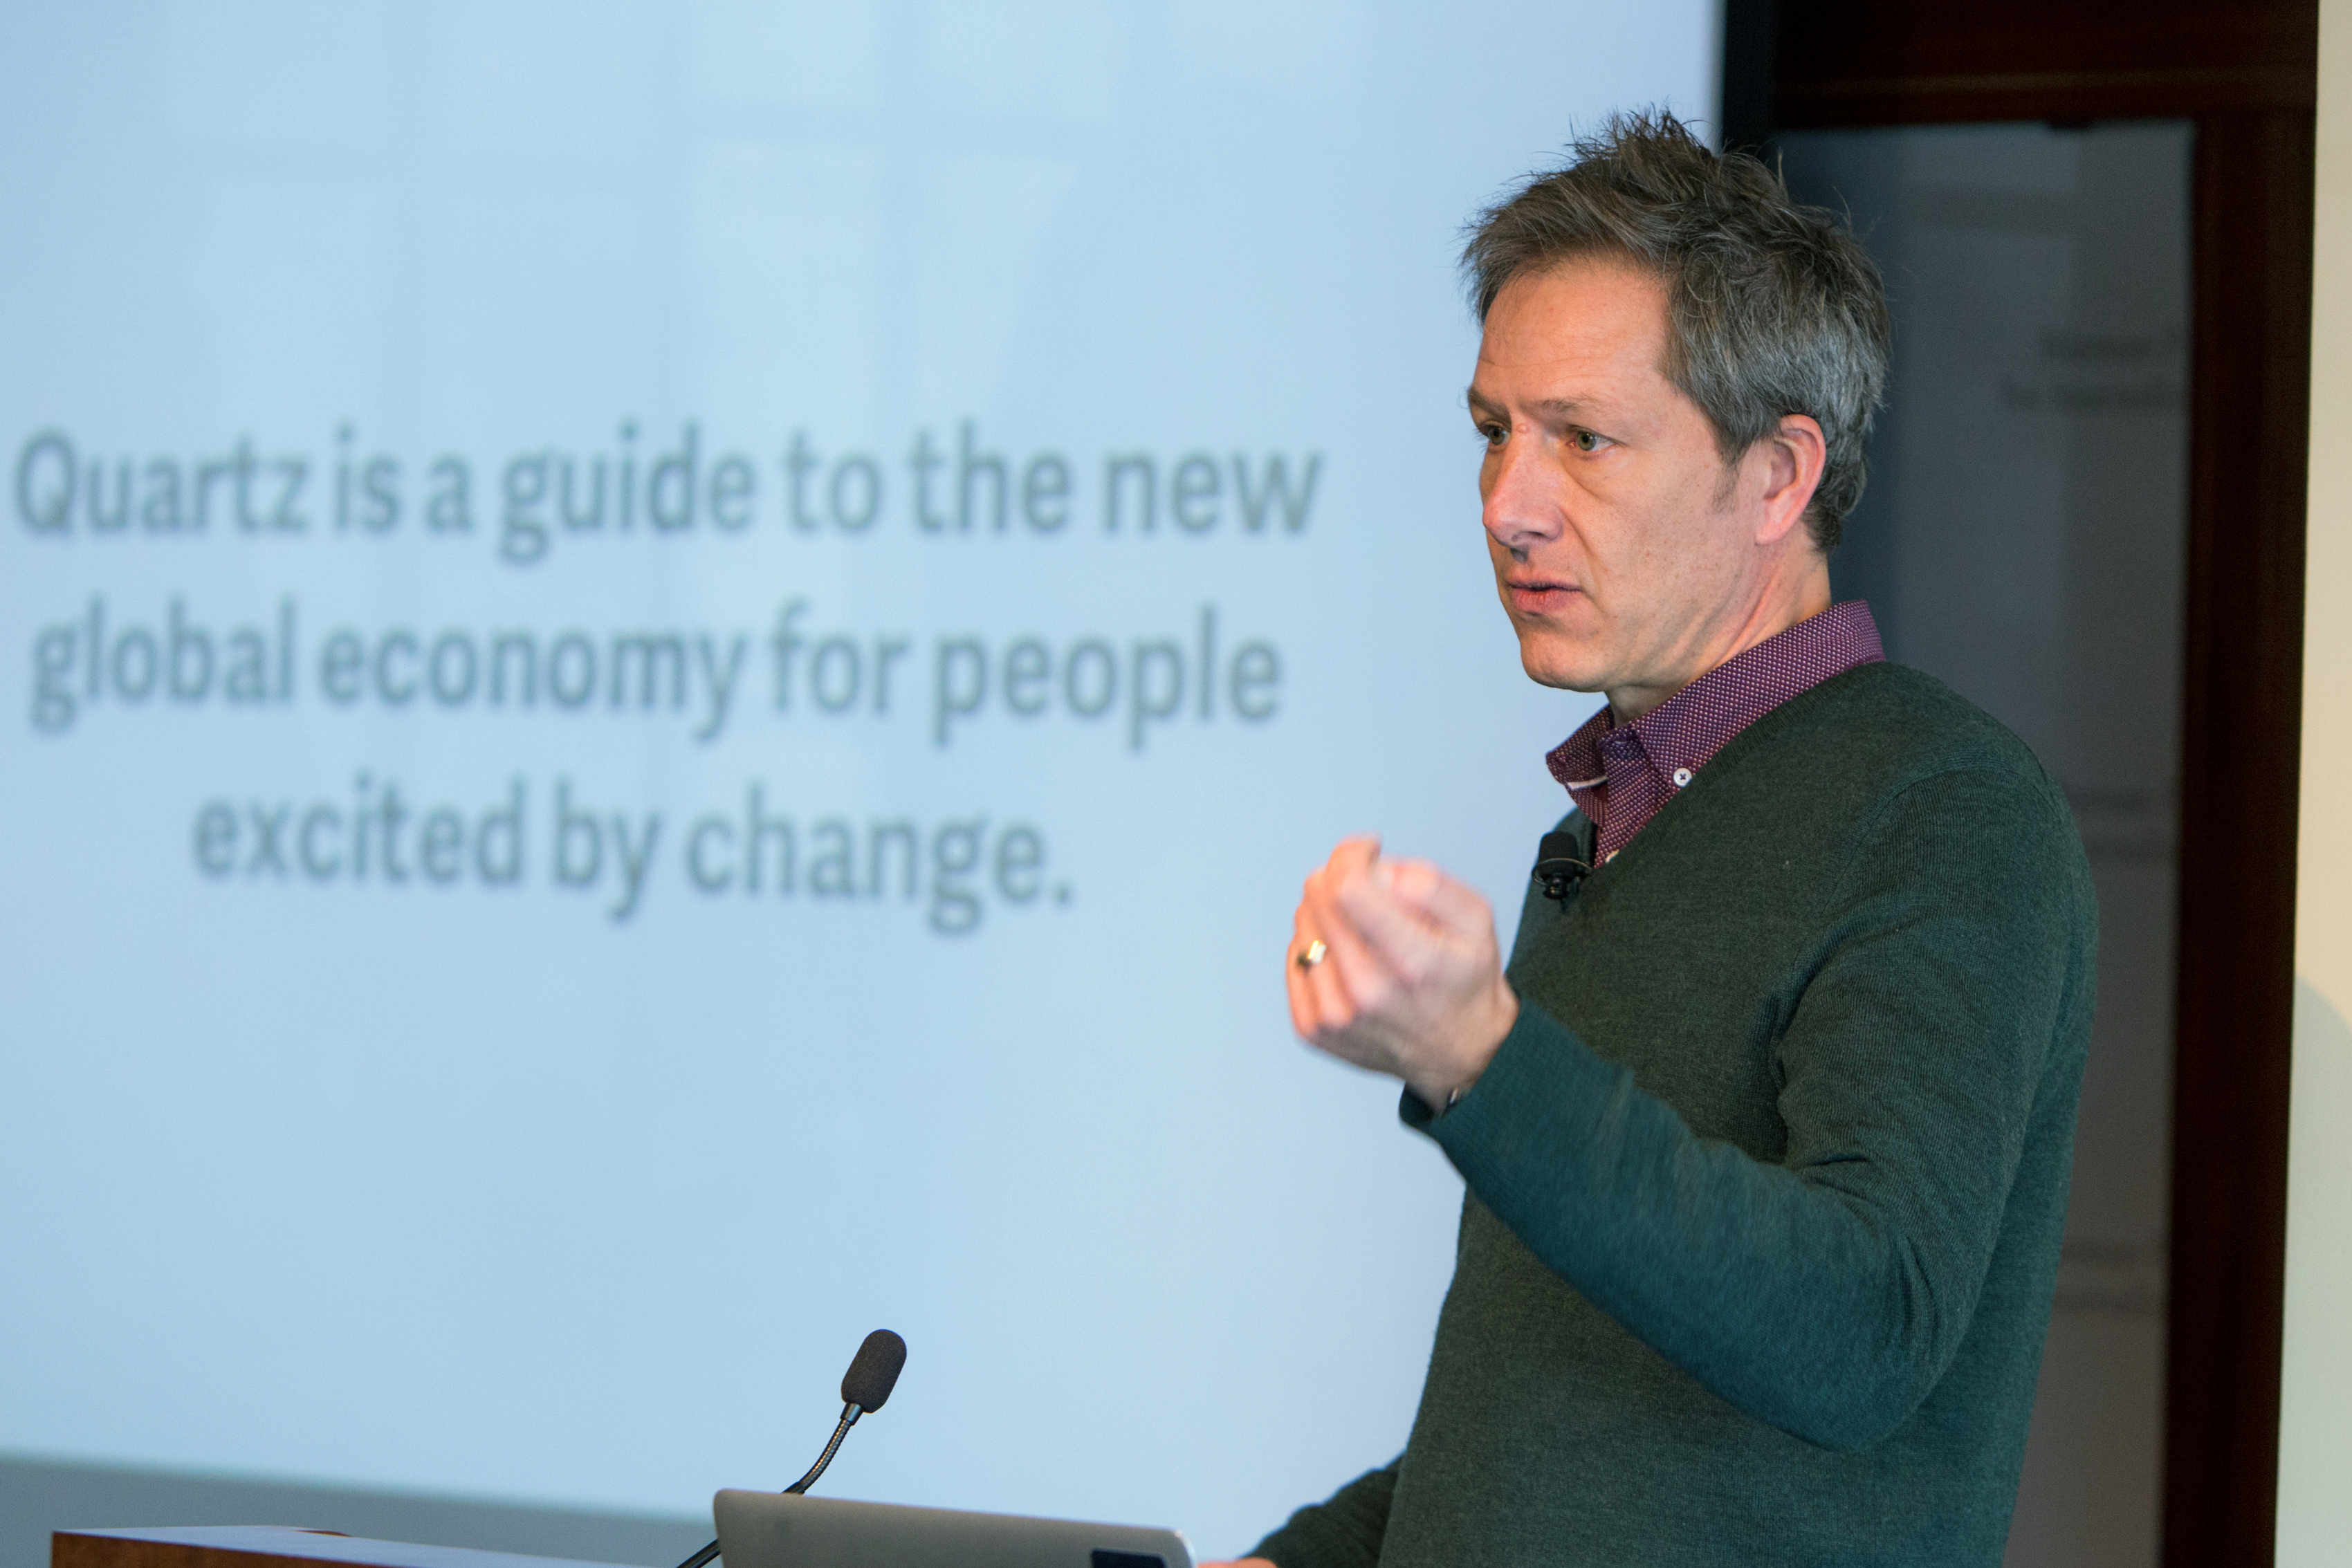 Quartz publisher Jay Lauf speaking at the Nieman Foundation in February